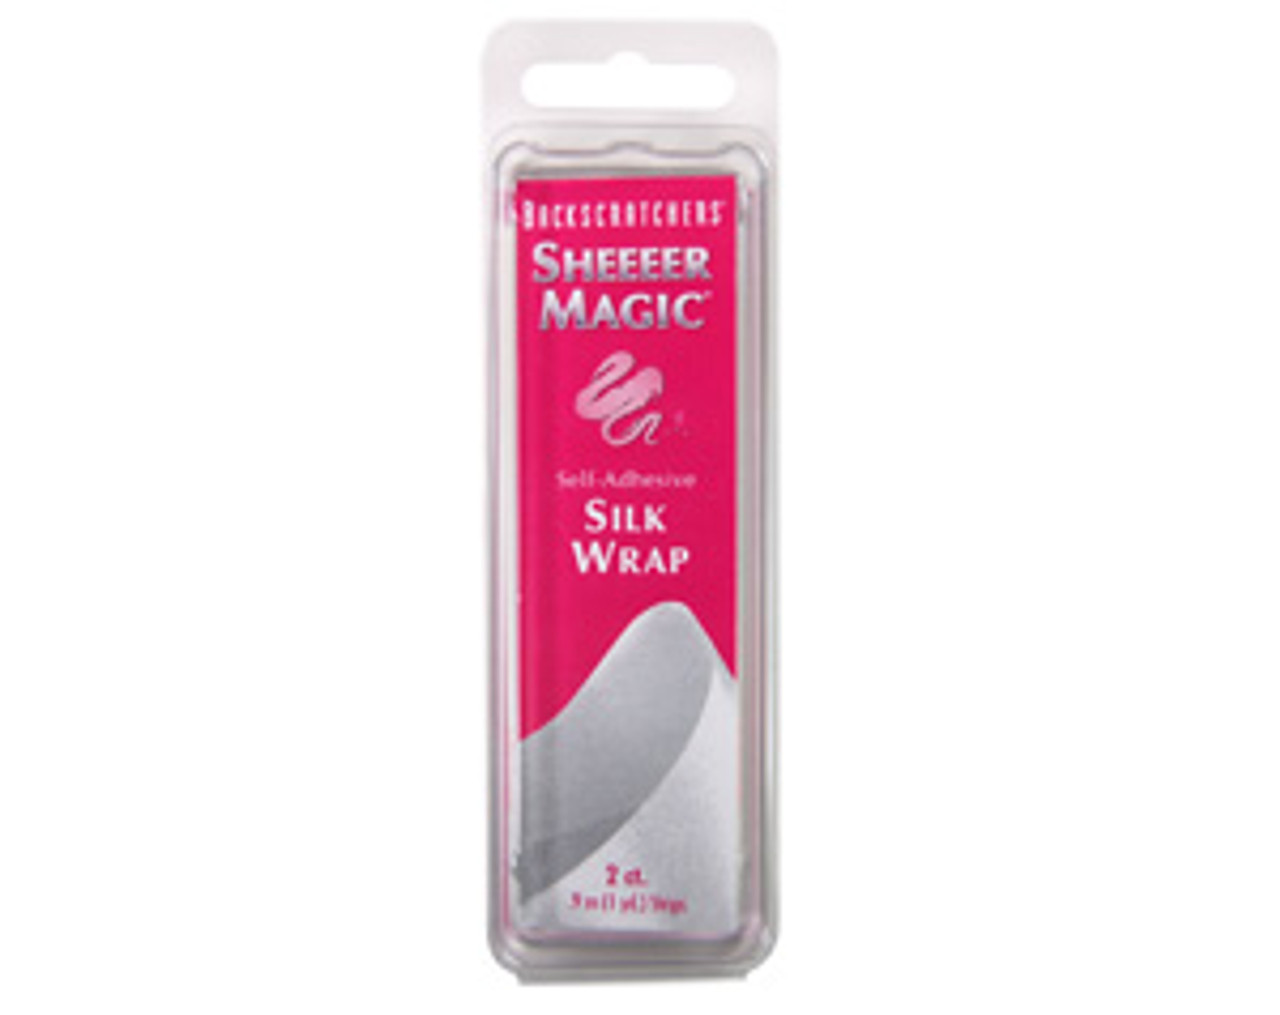 Sheeeer Magic Silk 1yd. Strip - Backscratchers